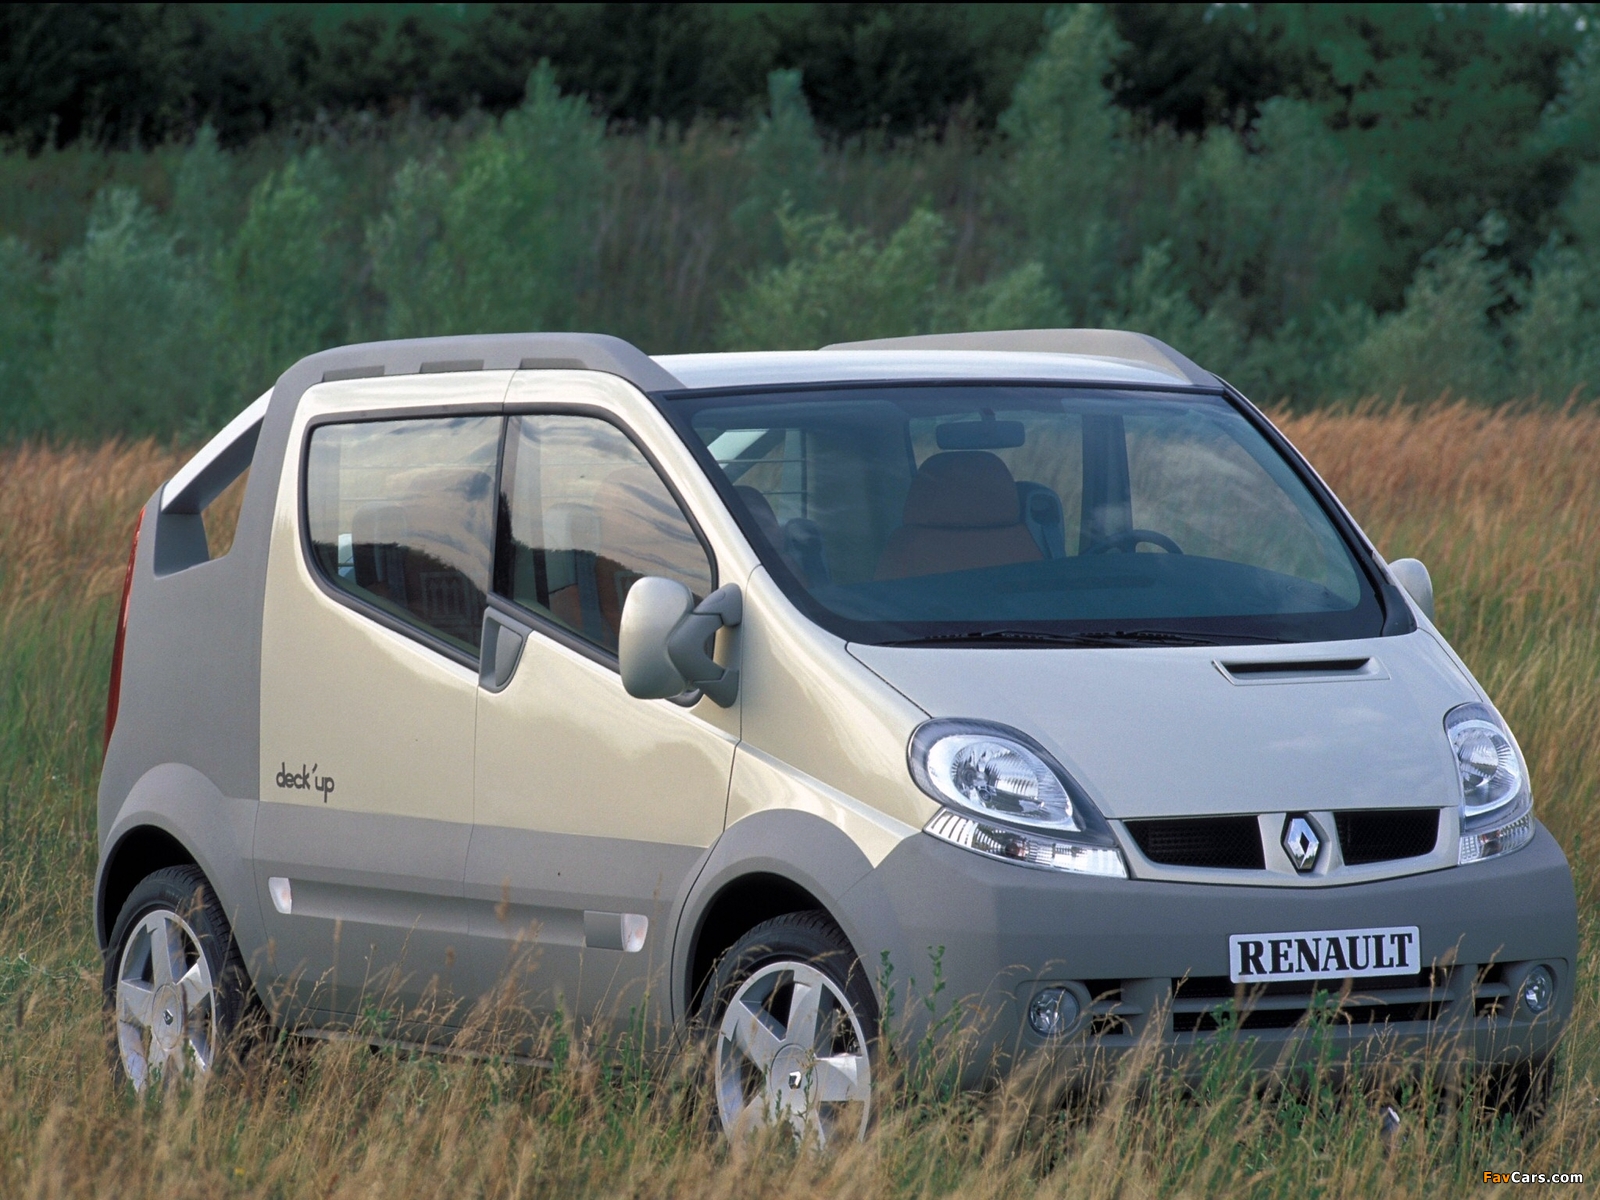 Renault Trafic Deckup Concept 2004 pictures (1600 x 1200)